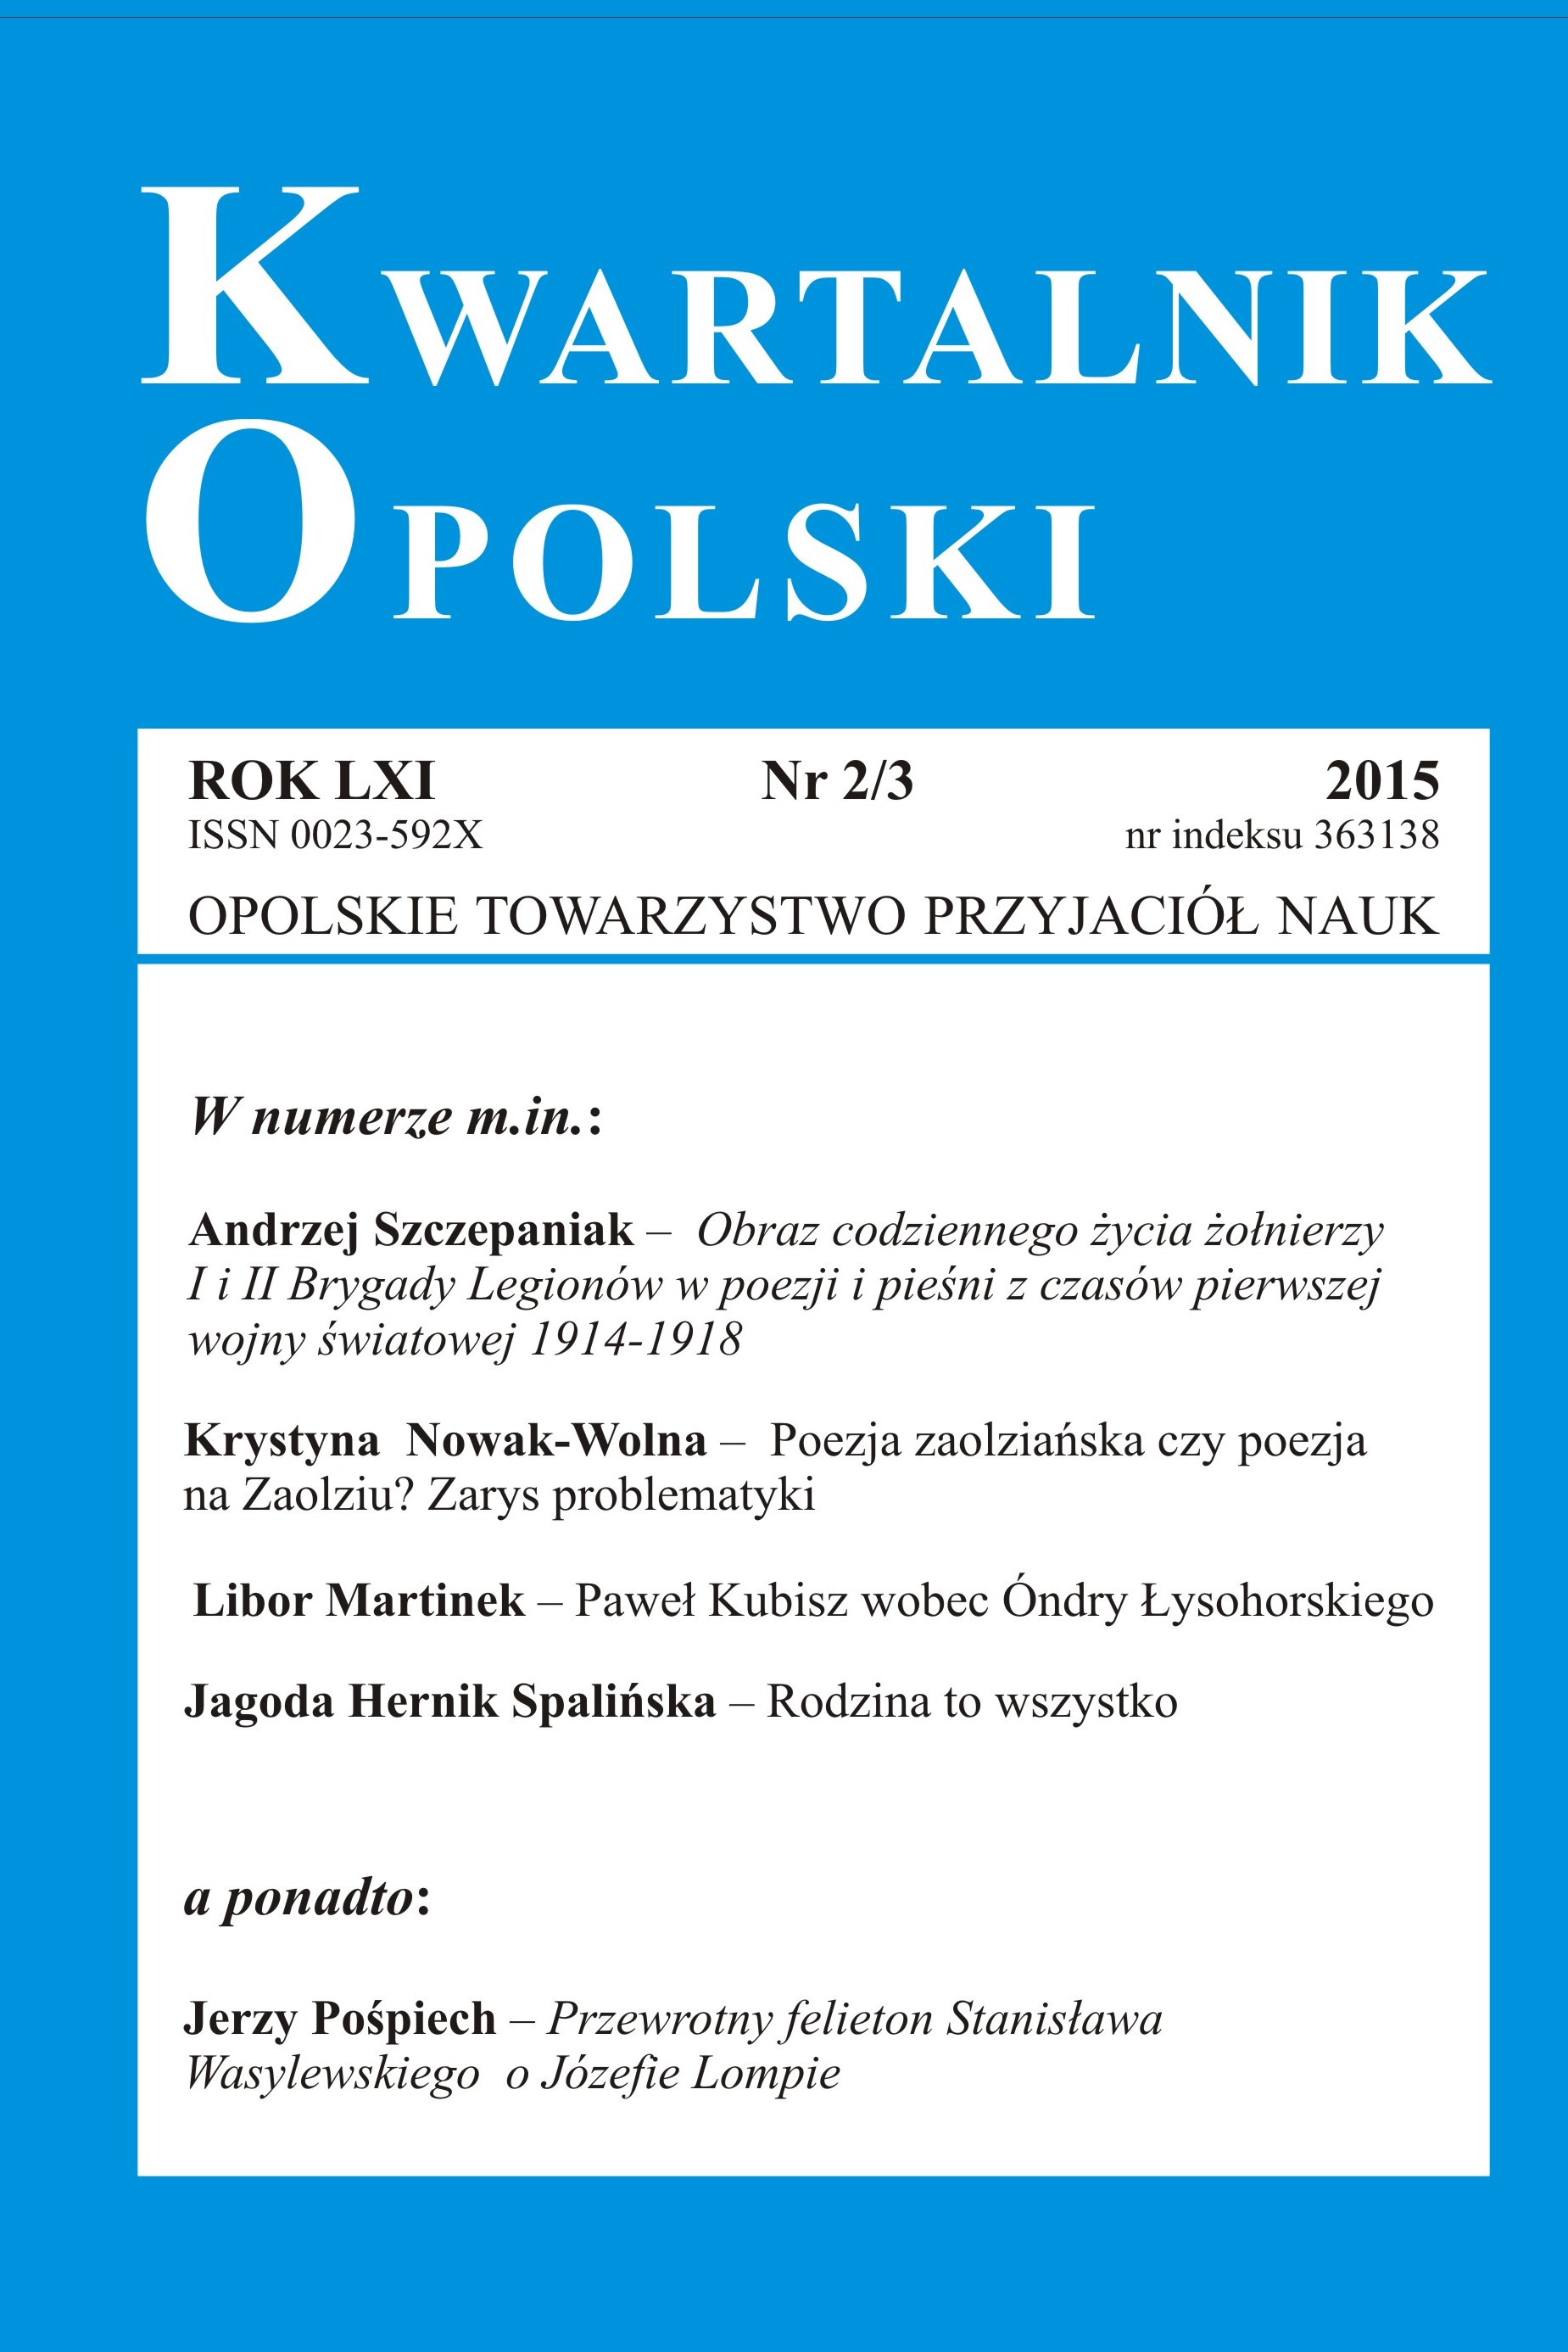 Kwartalnik Opolski 2/3 2015